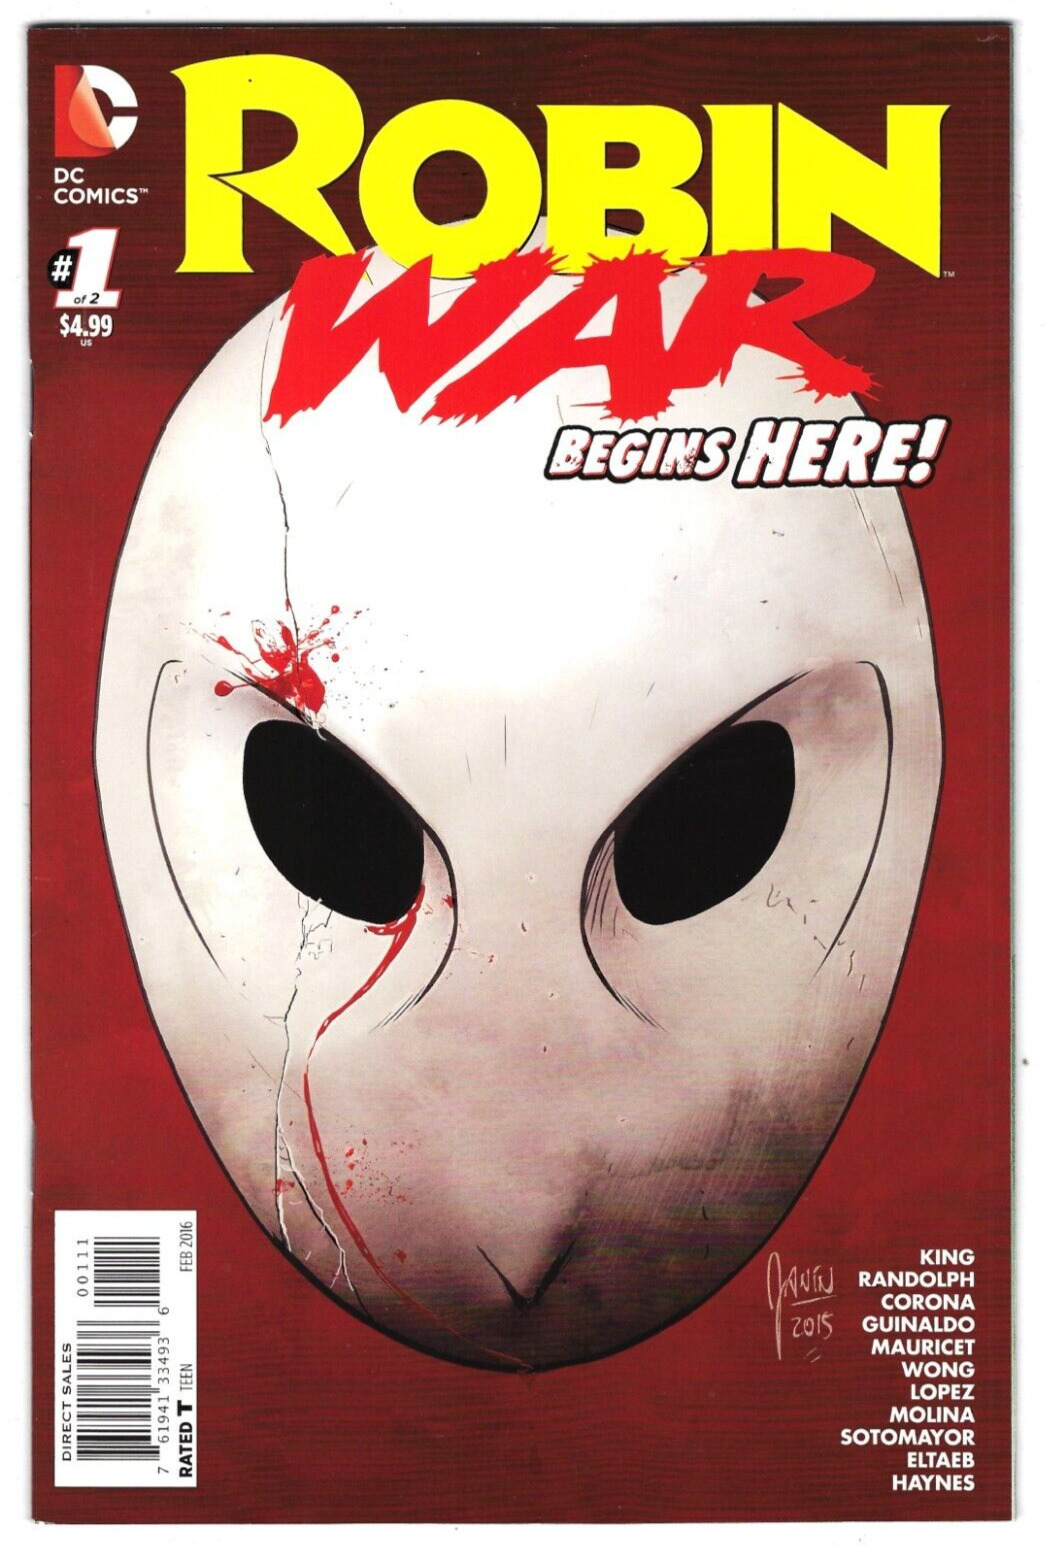 DC Comics ROBIN WAR #1 first printing cover A